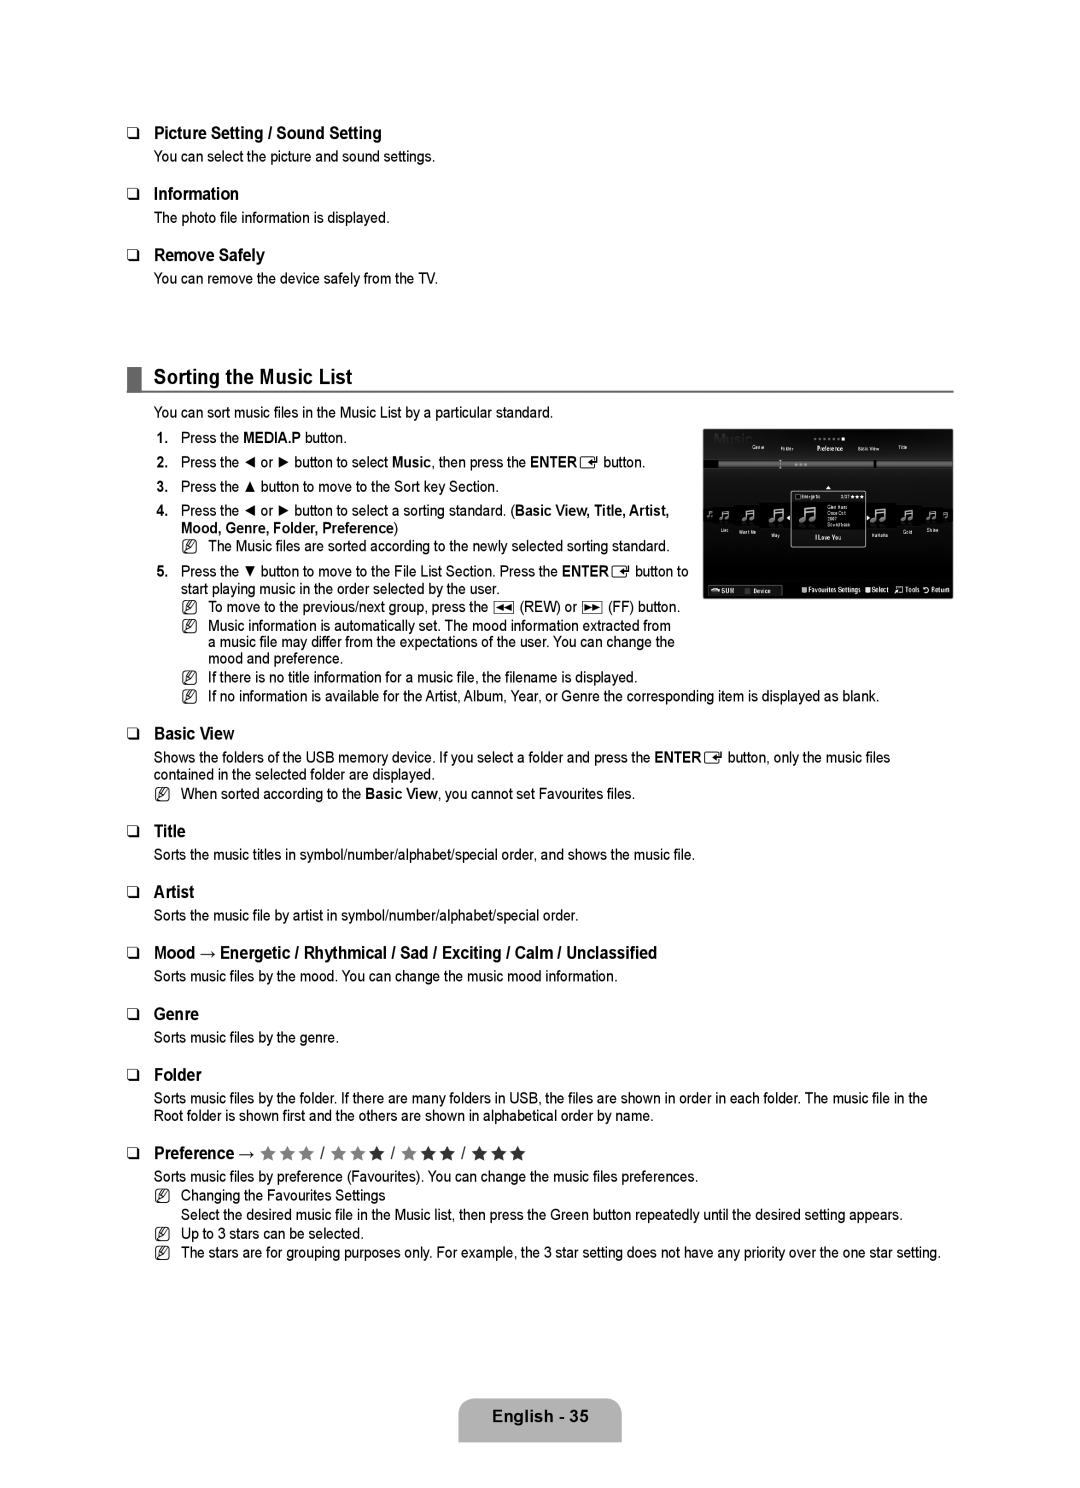 Samsung LA46B750U1R Sorting the Music List, Picture Setting / Sound Setting, Title, Artist, Genre, Information, Basic View 